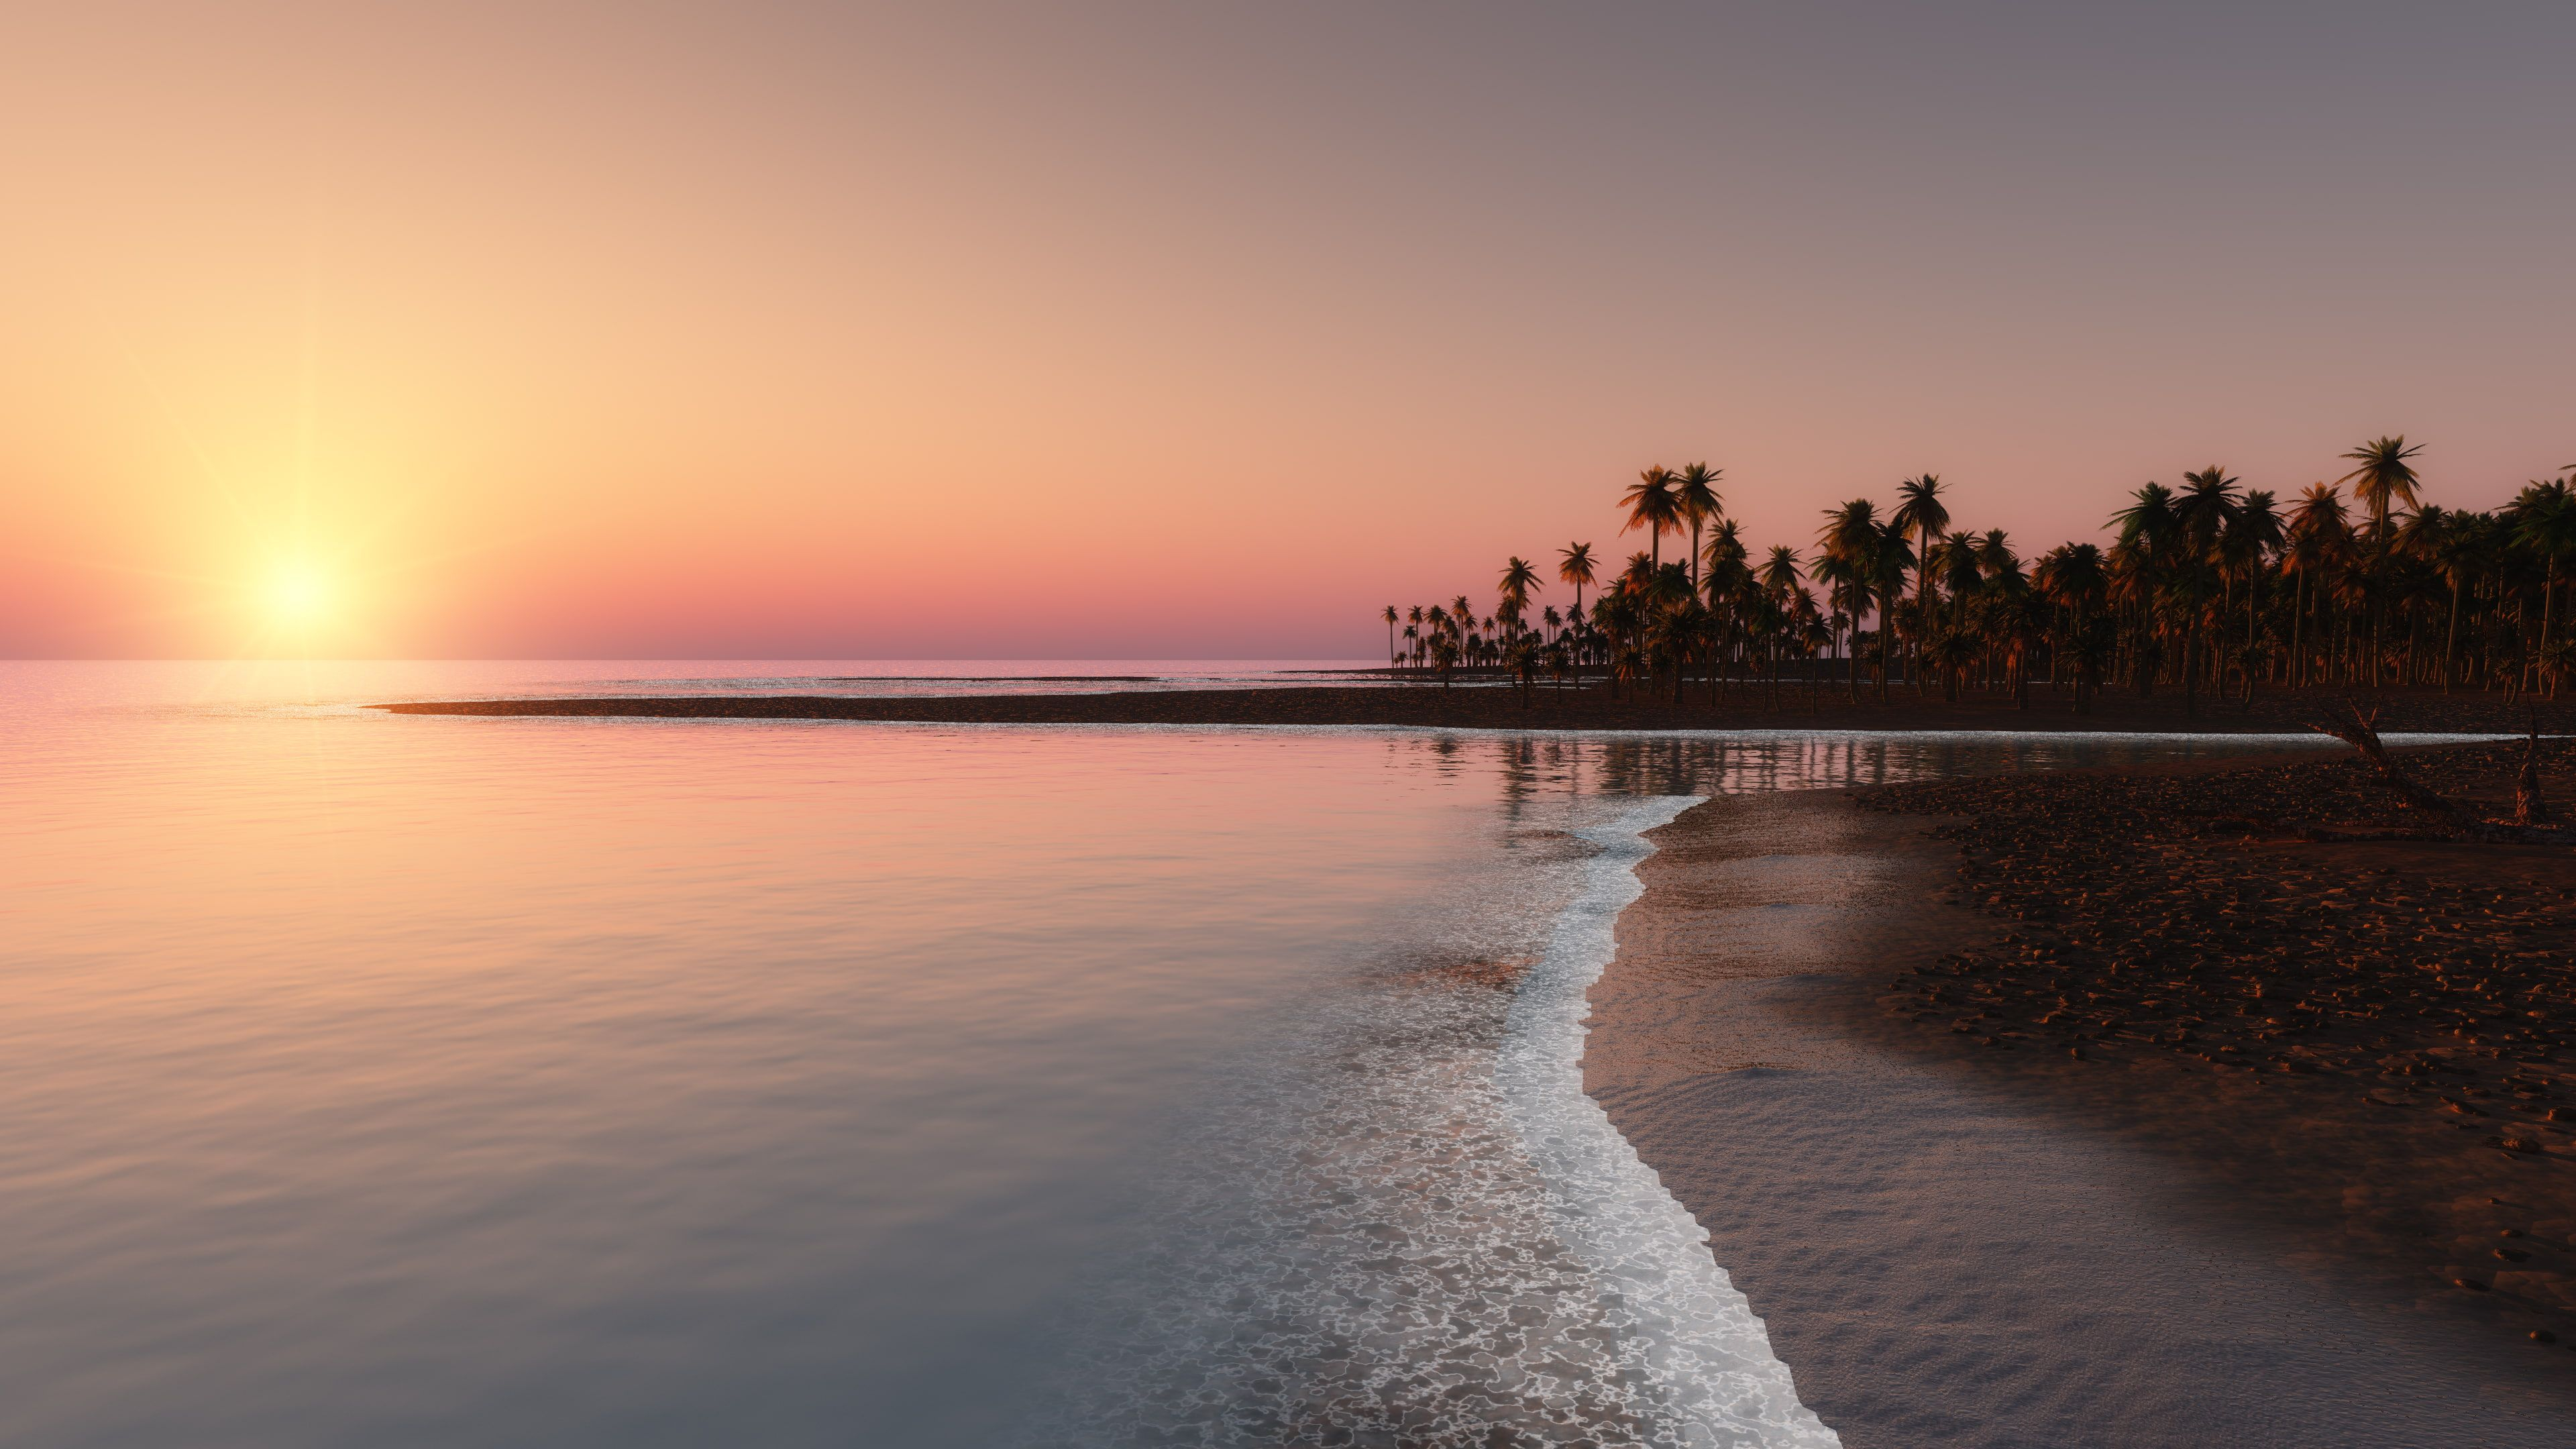 3840x2160 4K #Landscape #Scenery #Sunset #Paradise #Beach #4K #wallpaper #hdwallpaper #desktop | Sunset landscape, Beach wallpaper, Landscape